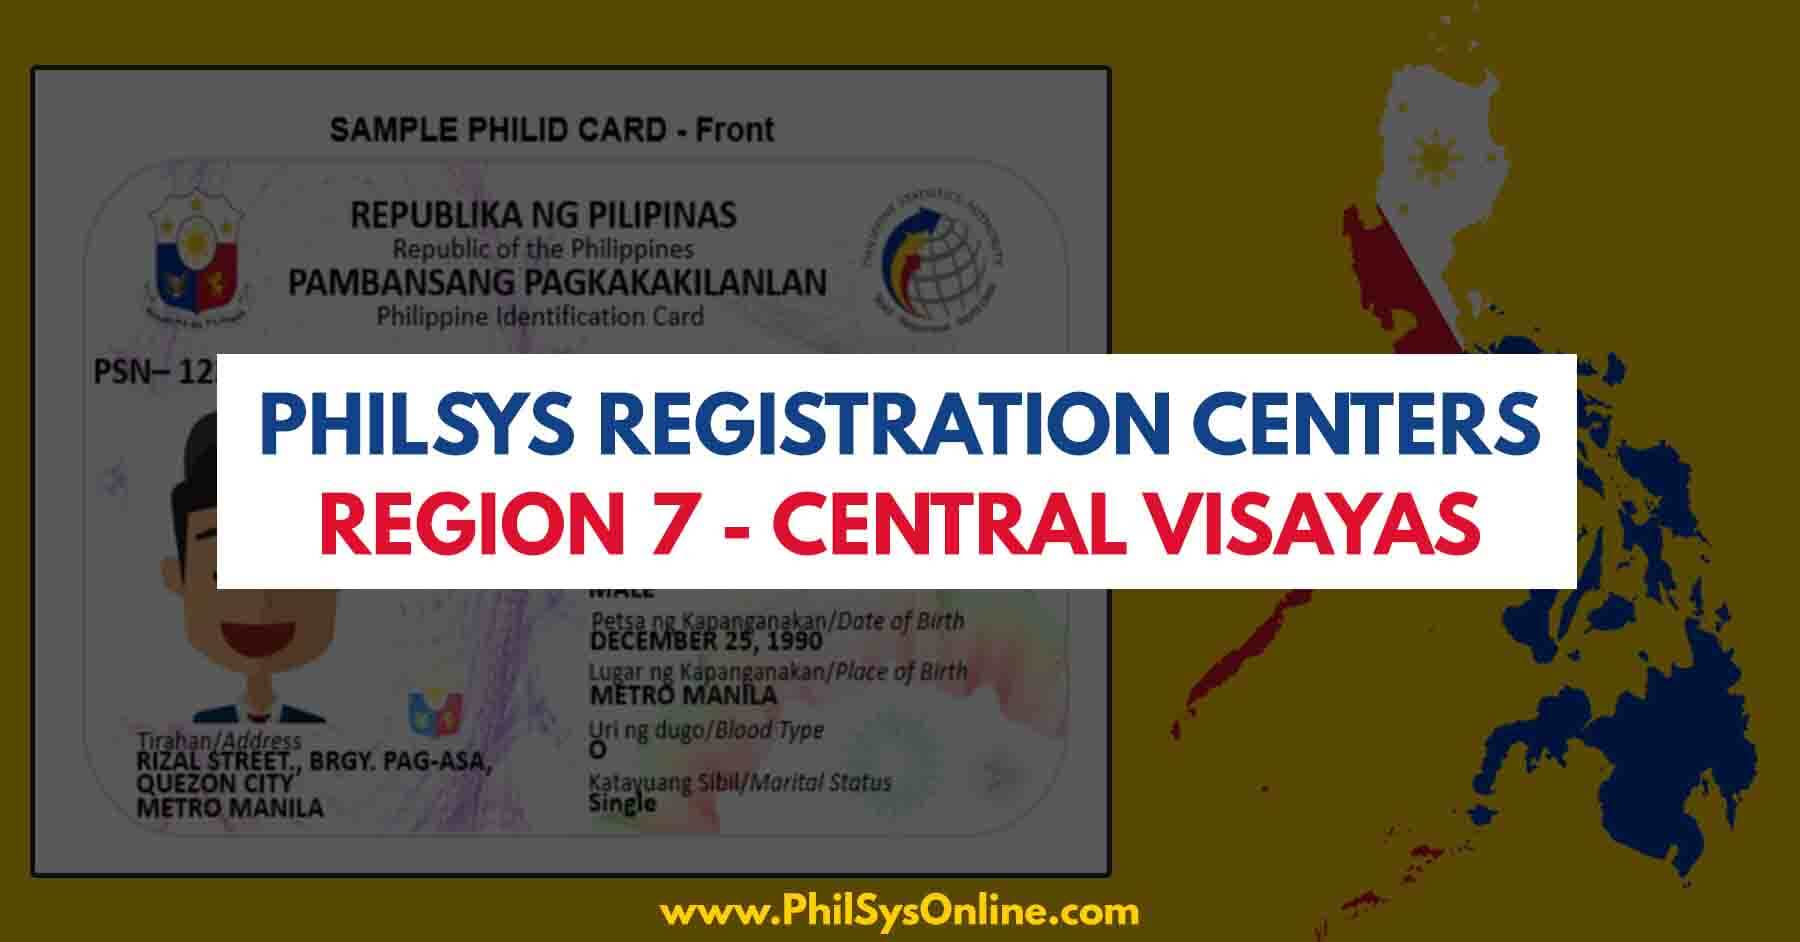 philsys registration centers region 7 central visayas philippines